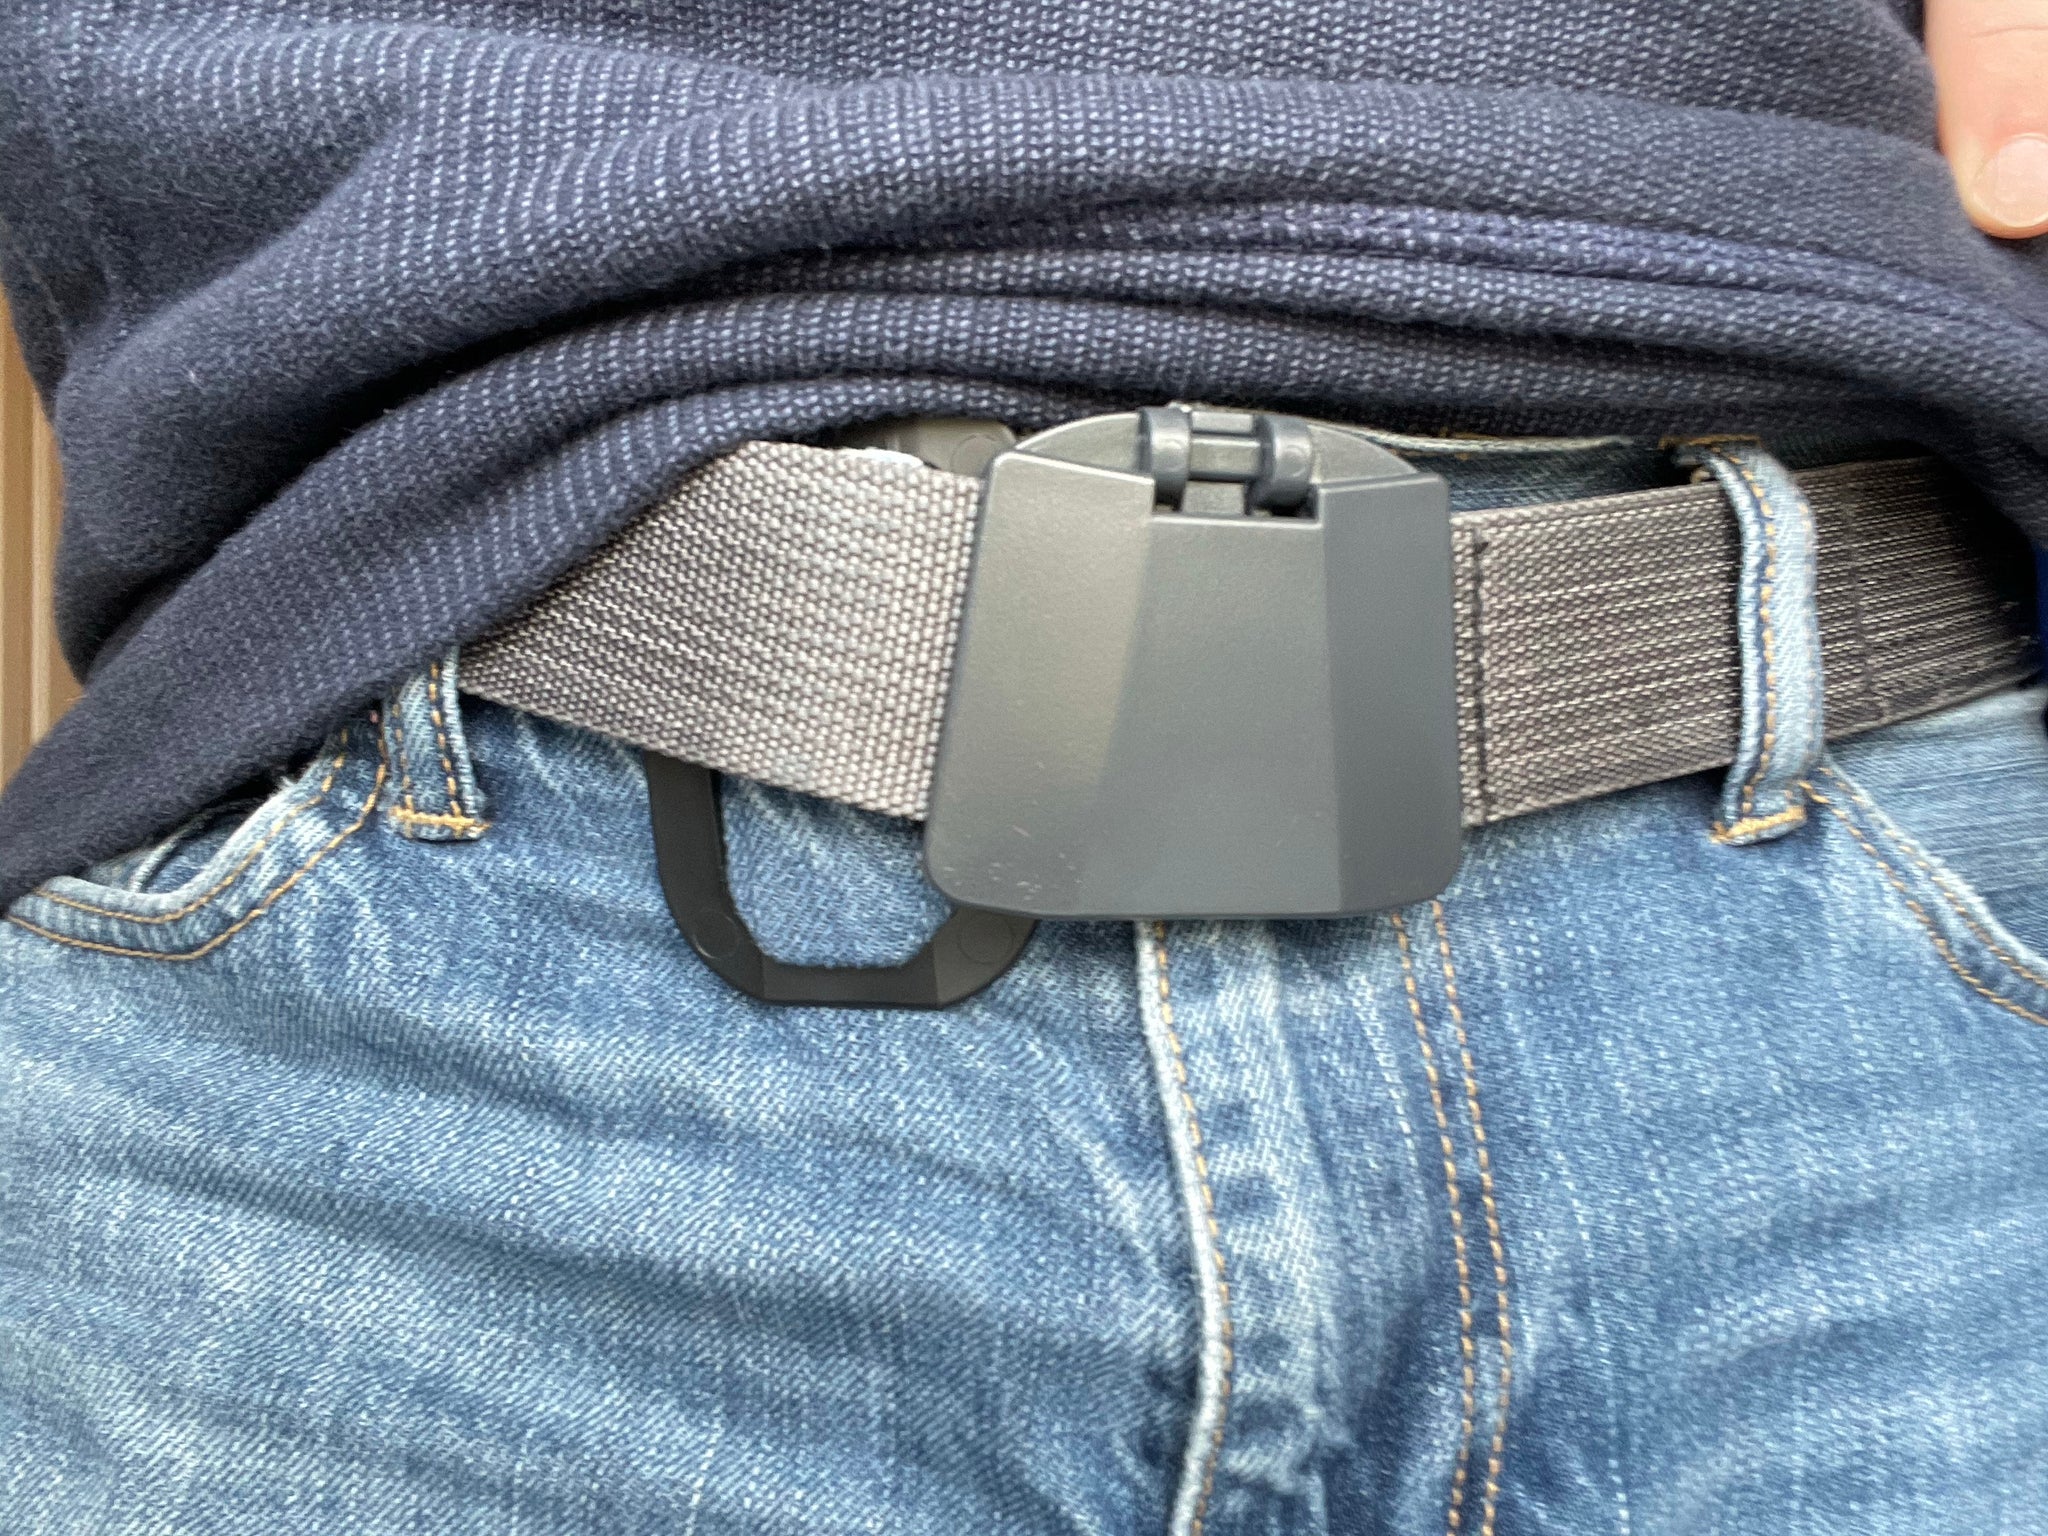 The Fabriclip™- Belts Optional